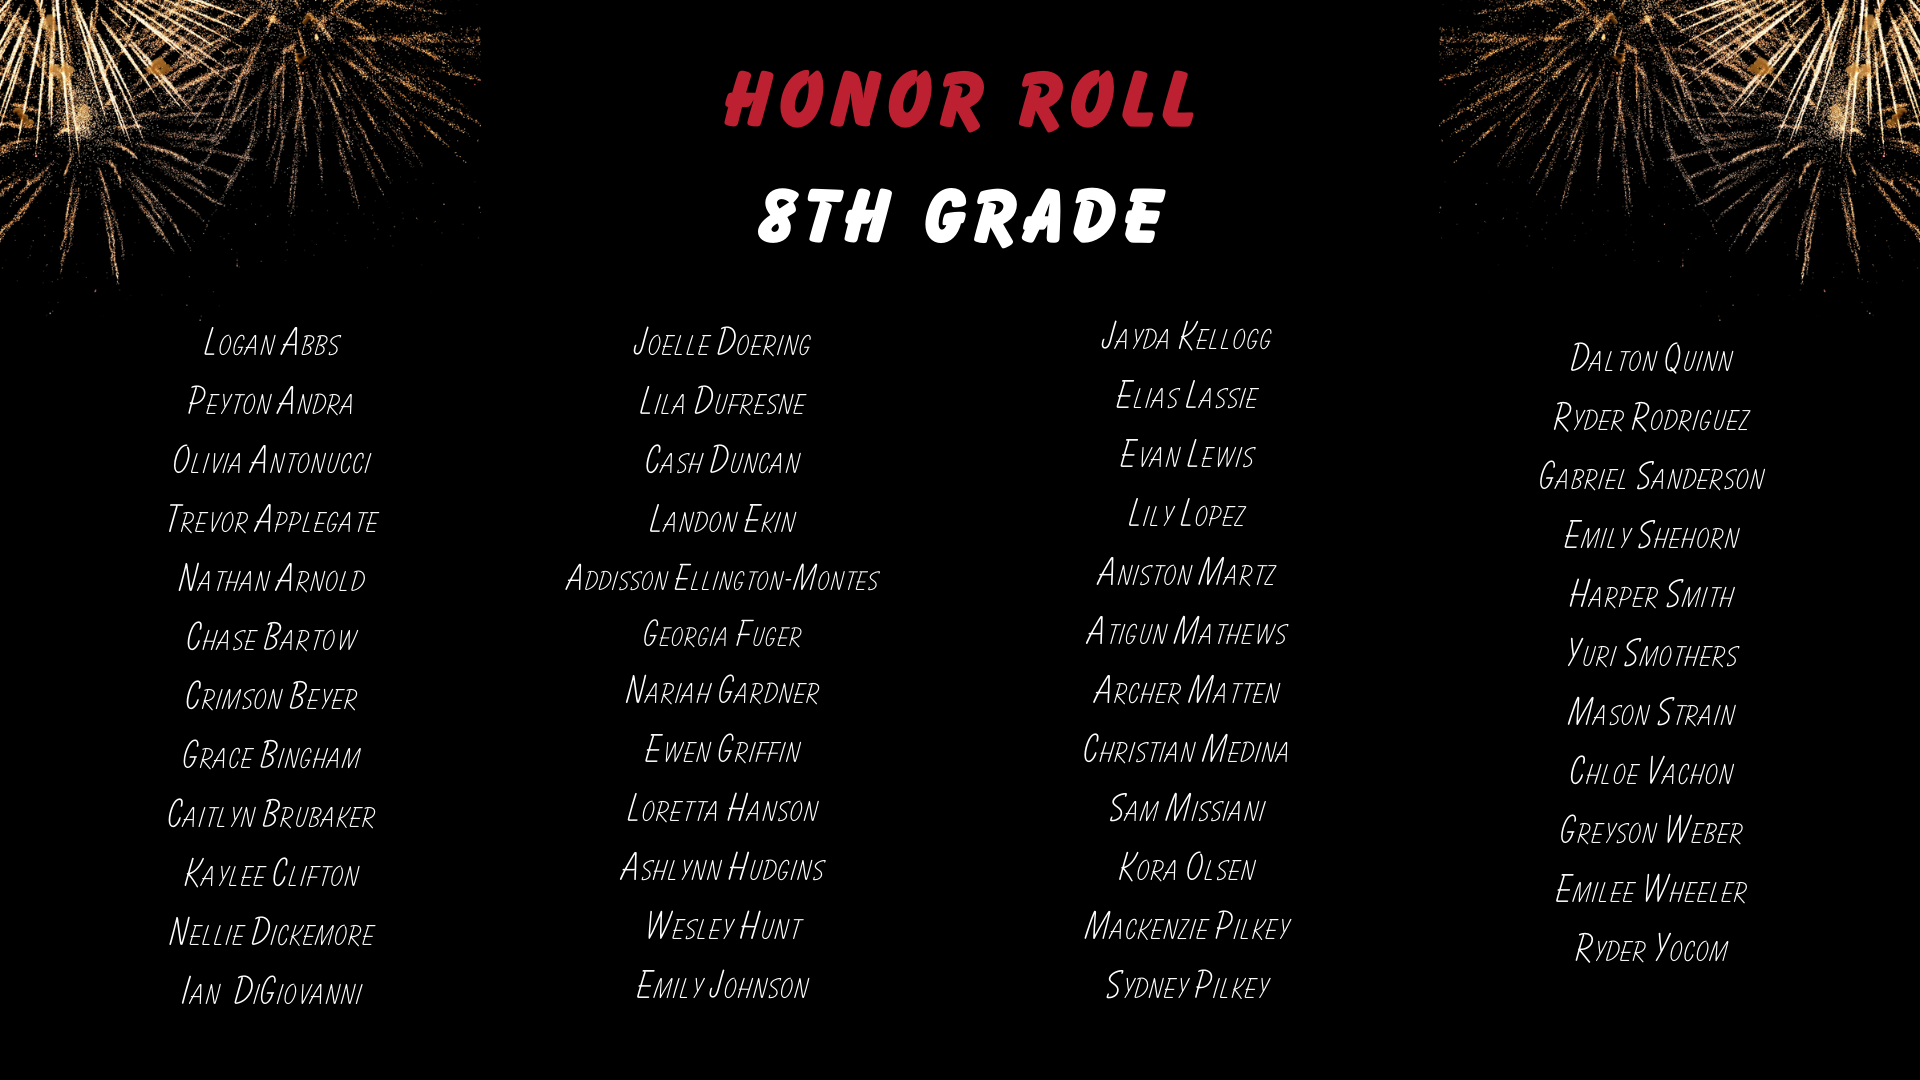 Honor Roll 8th grade